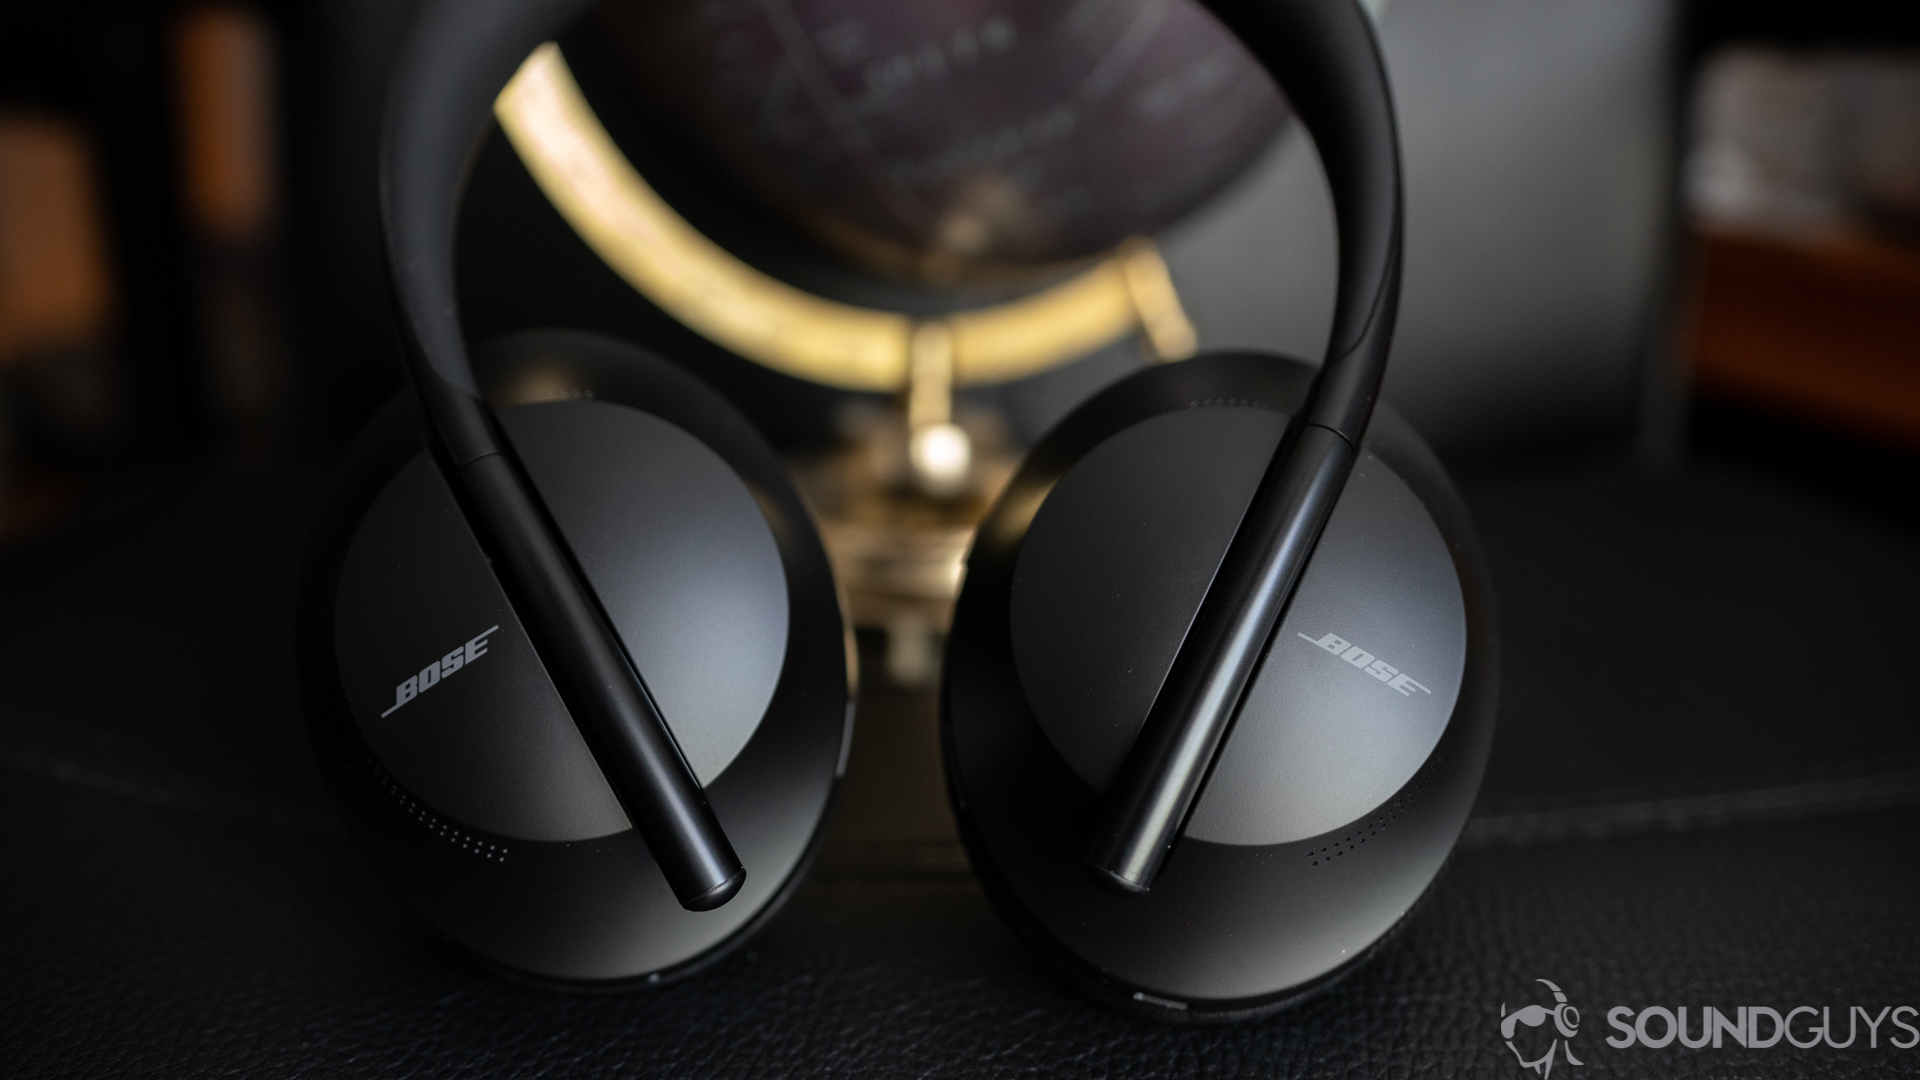 Bose Noise Canceling 700 headphones on a black surface.